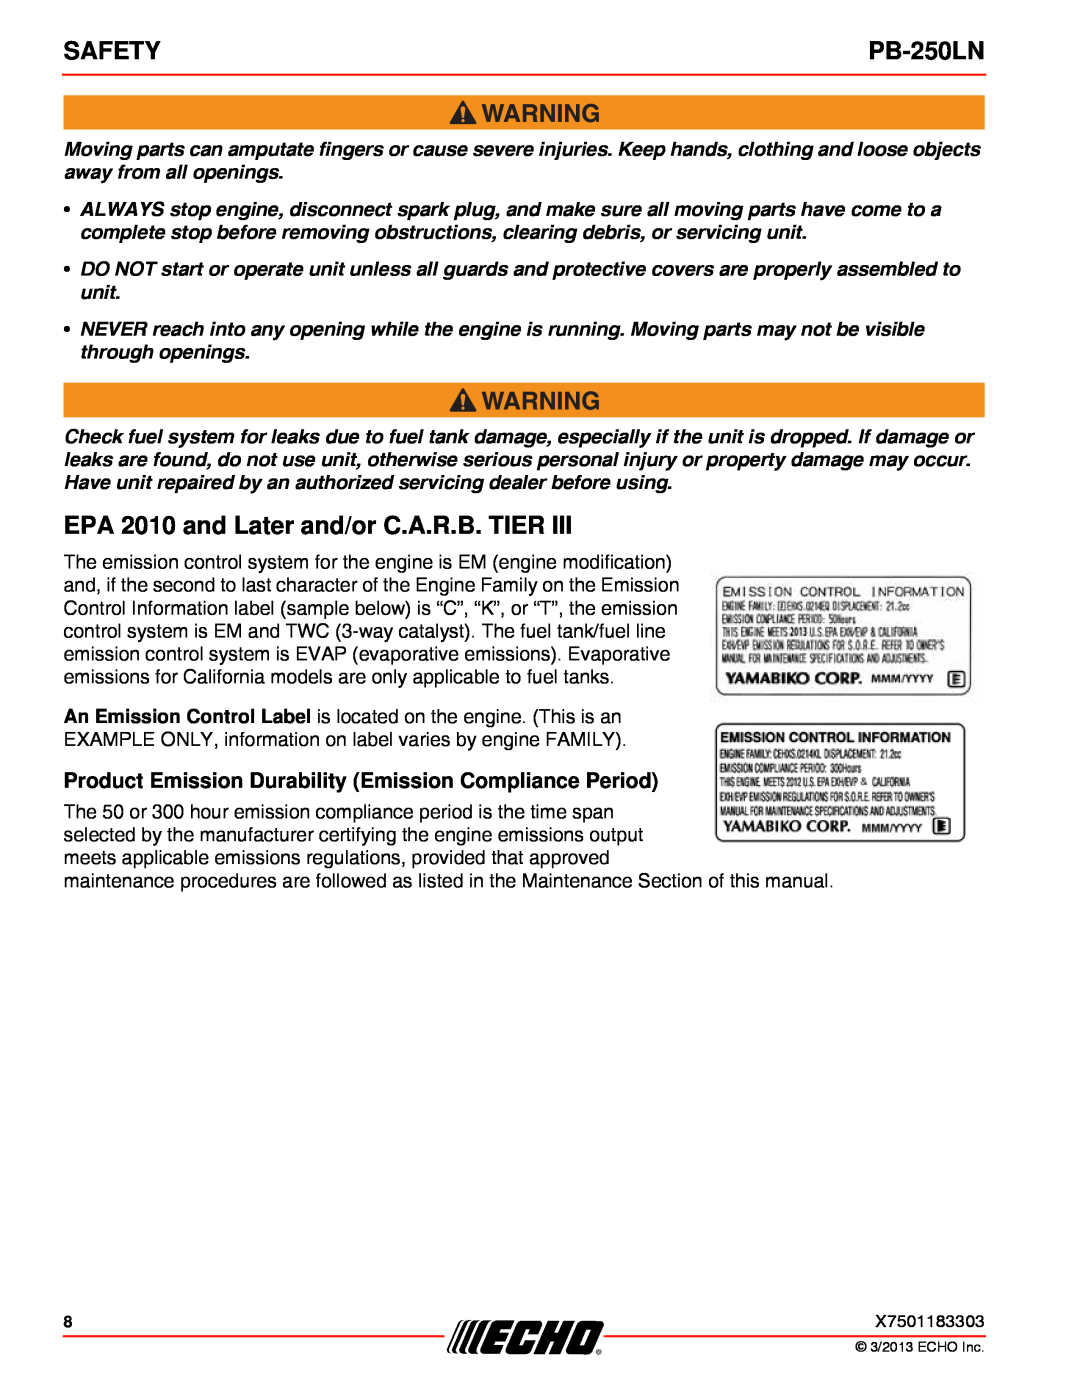 Echo PB-250LN EPA 2010 and Later and/or C.A.R.B. TIER, Product Emission Durability Emission Compliance Period, Safety 